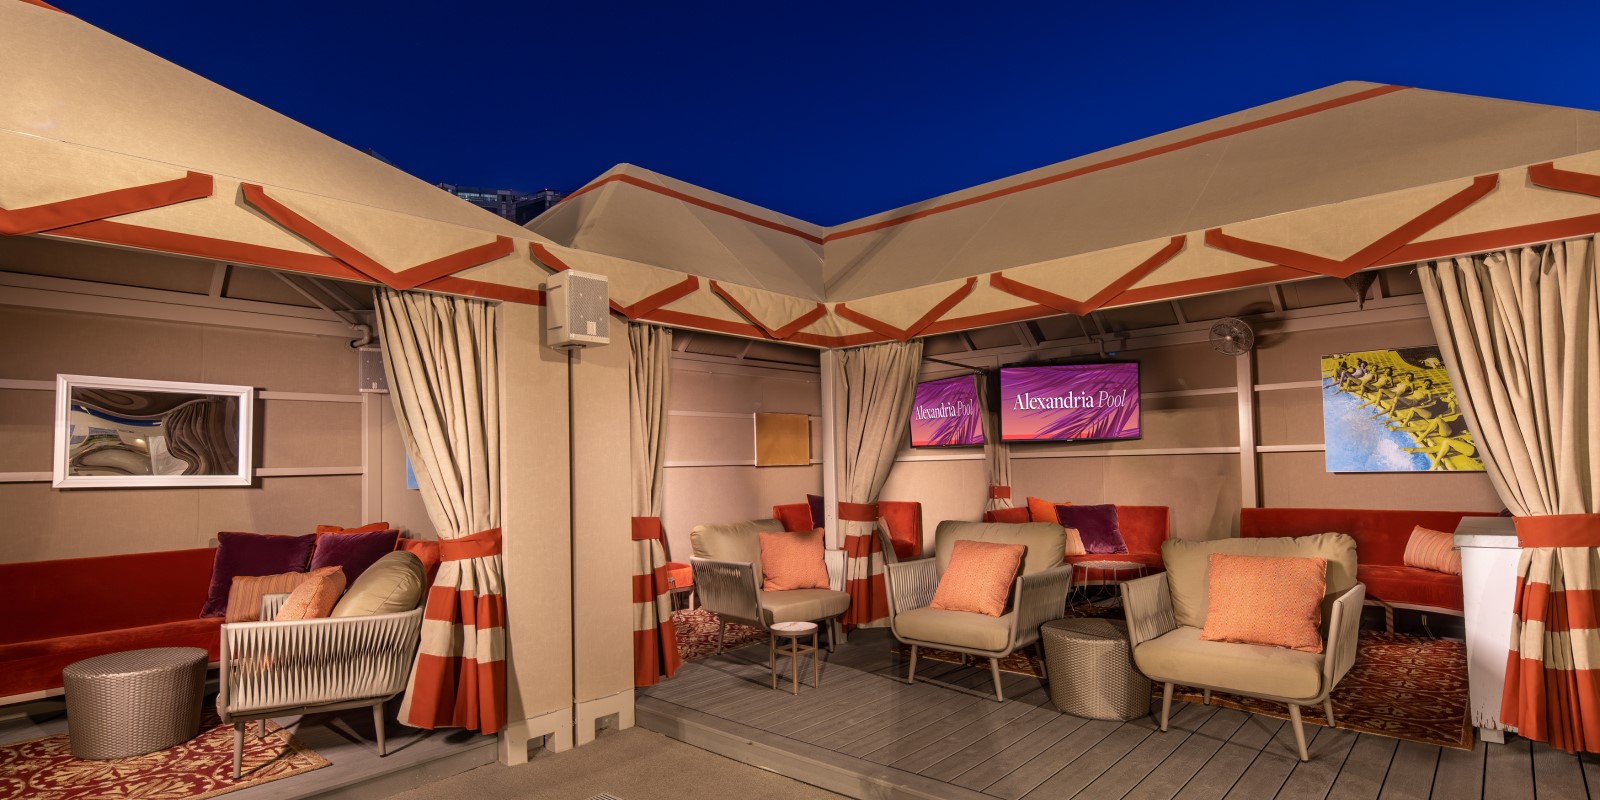 Pool & Cabana/Daybed Reservations - Virgin Hotels Las Vegas